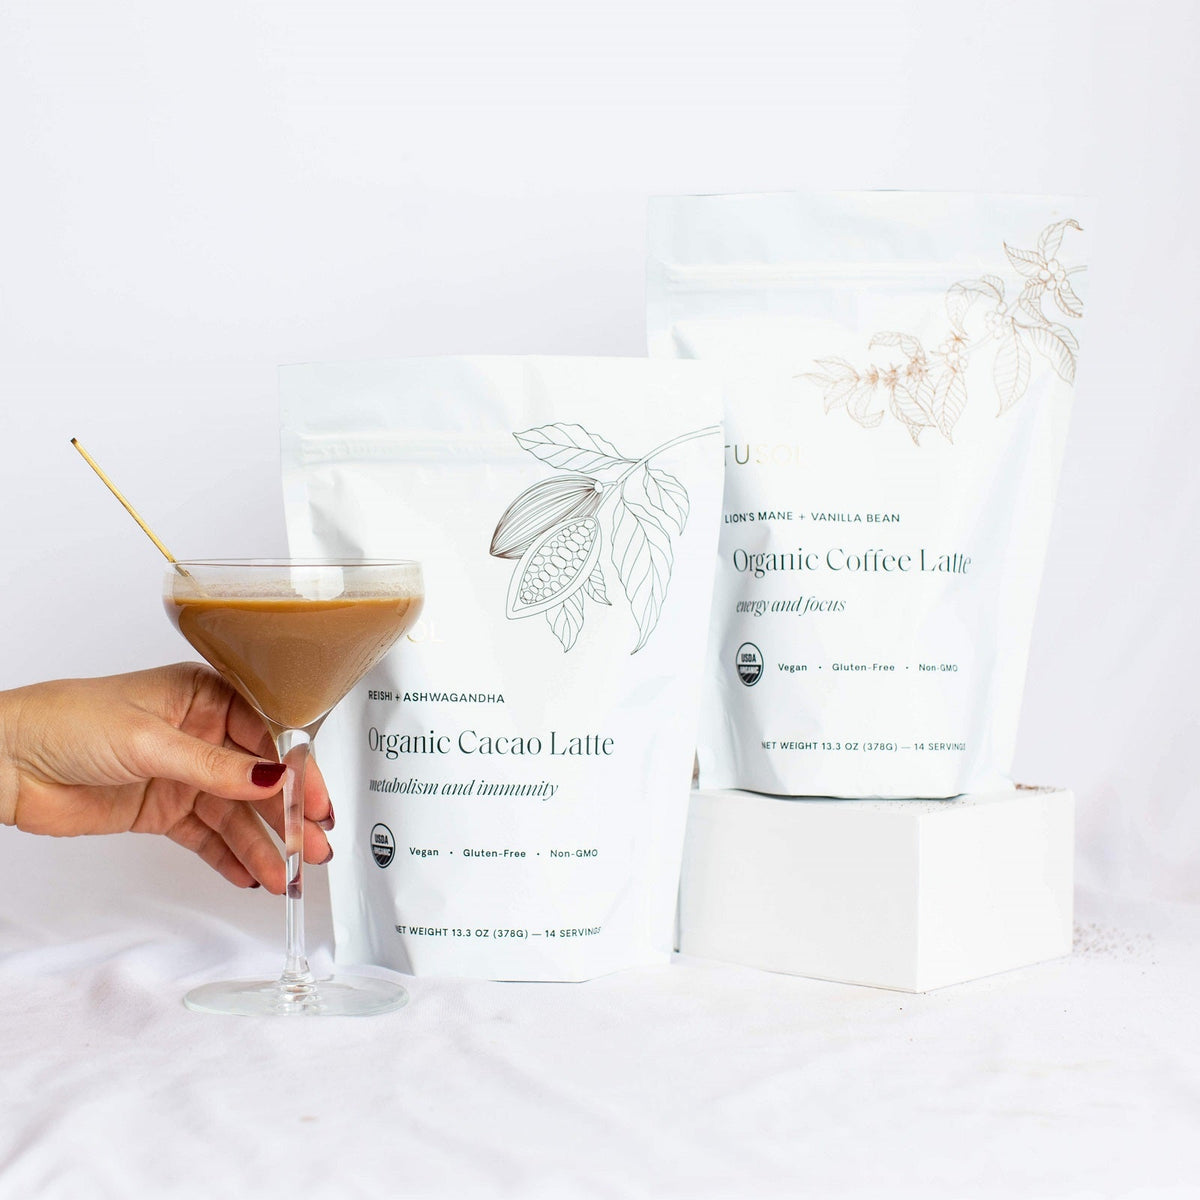 Organic Superfood Latte Mix by TUSOL Wellness